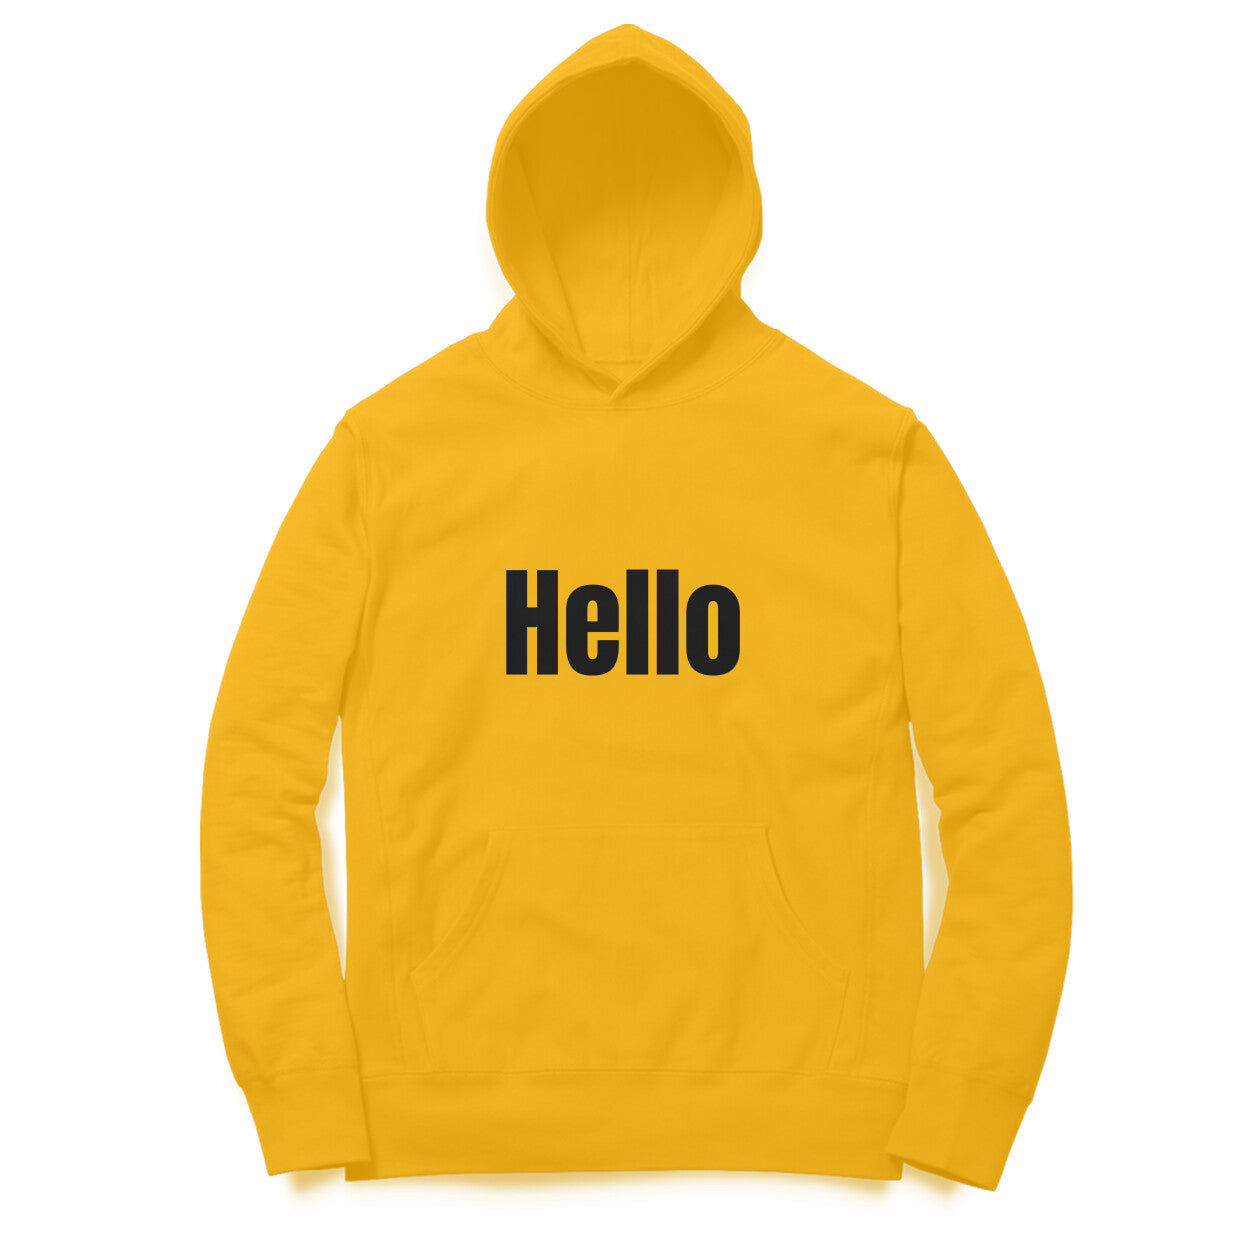 Hello' hoodie in dark font